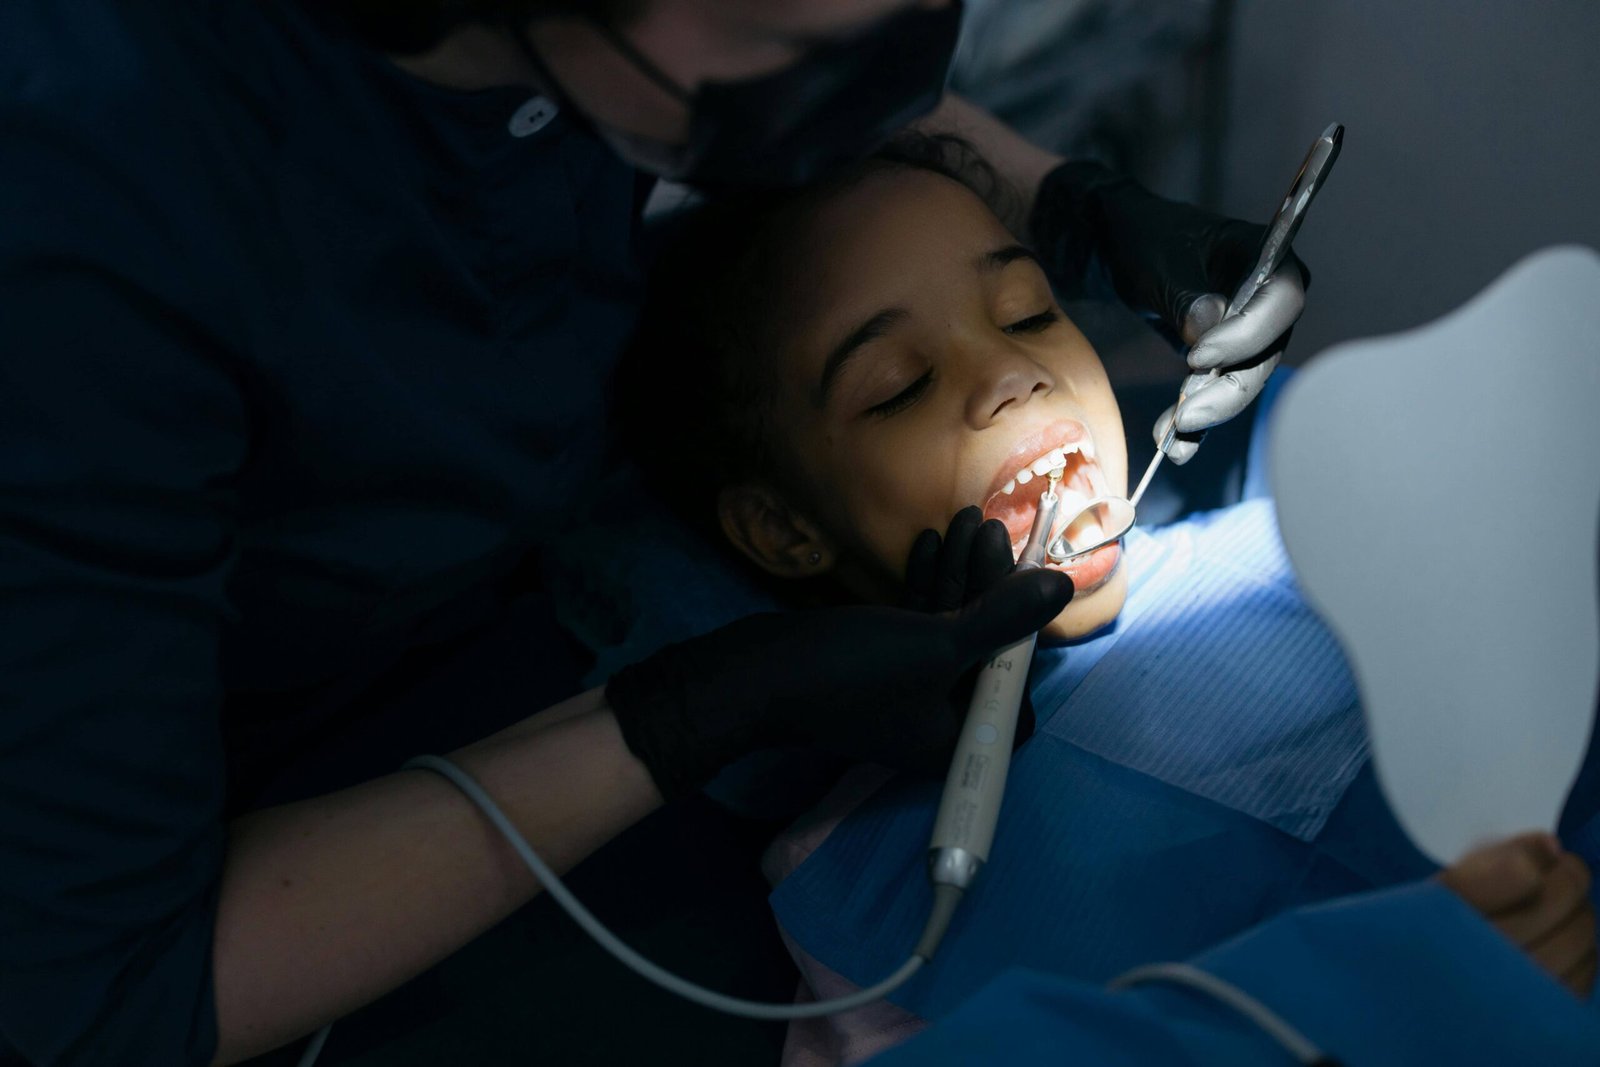 Preventive Pediatric Dental Services for Kids in Scarborough, ON